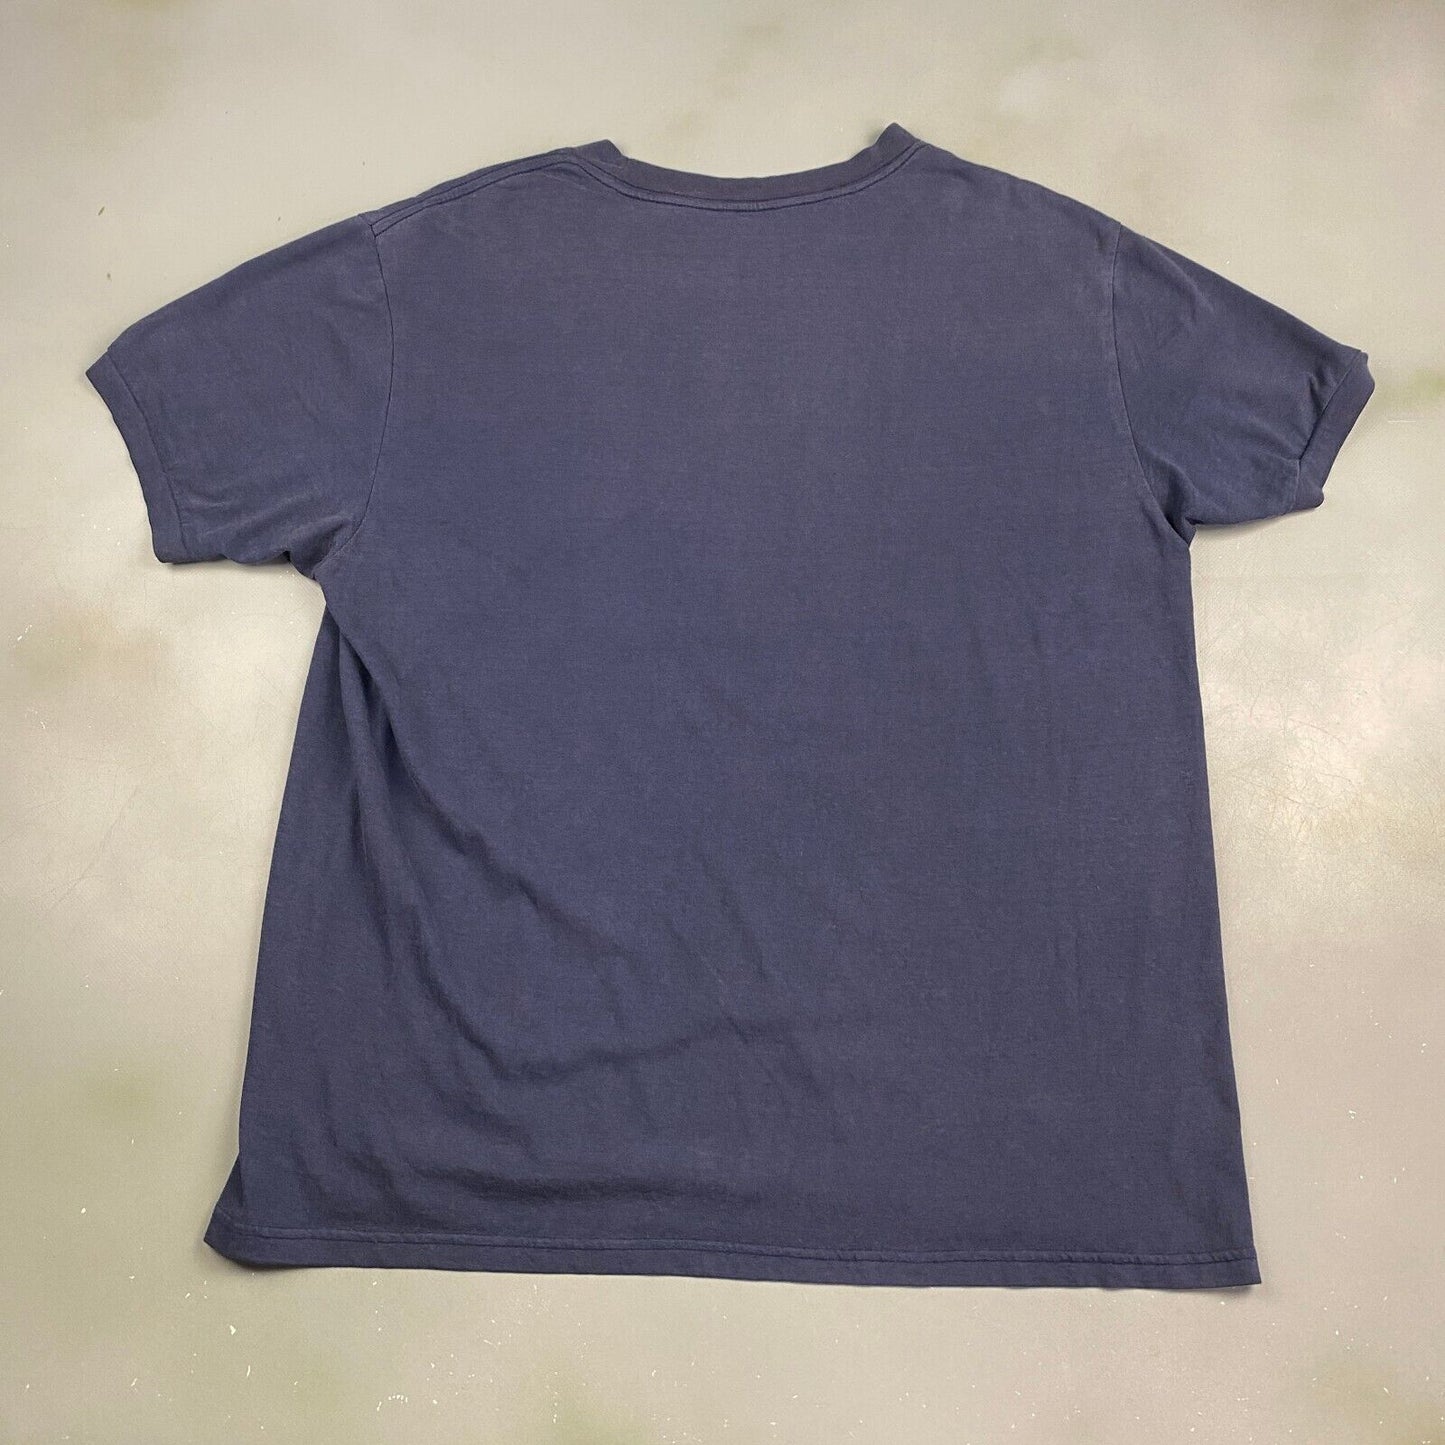 VINTAGE 90s Faded Blank Navy Pocket T-Shirt sz Large Adult